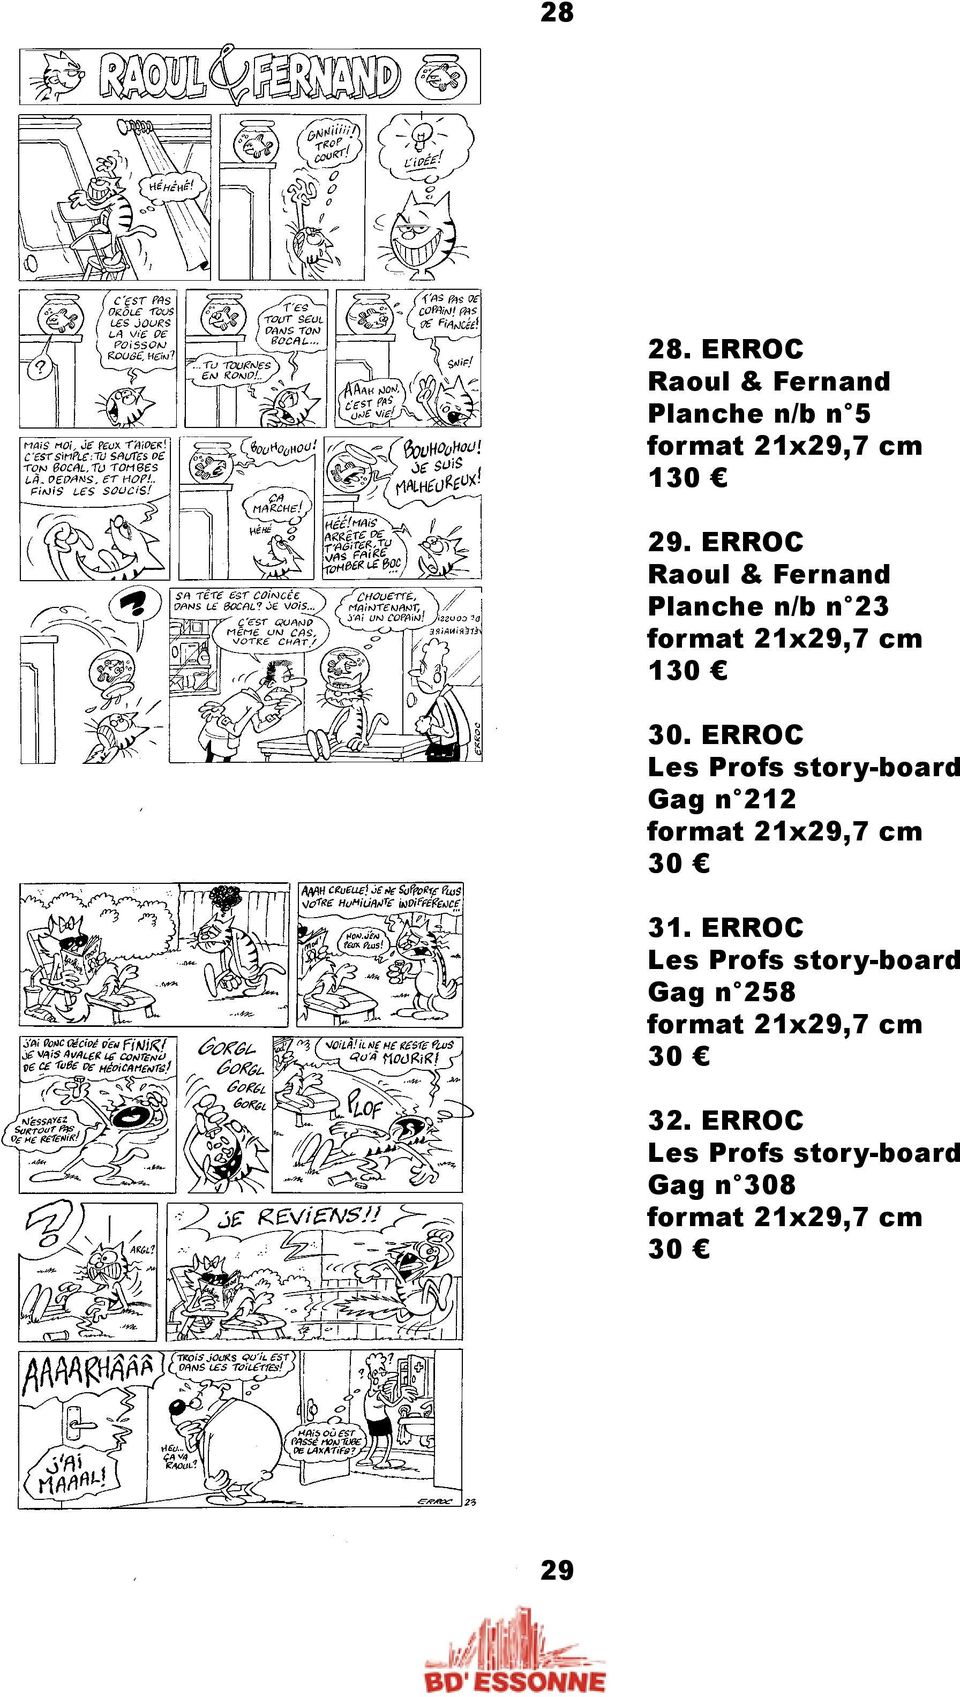 ERROC Les Profs story-board Gag n 212 format 21x29,7 cm 30 31.